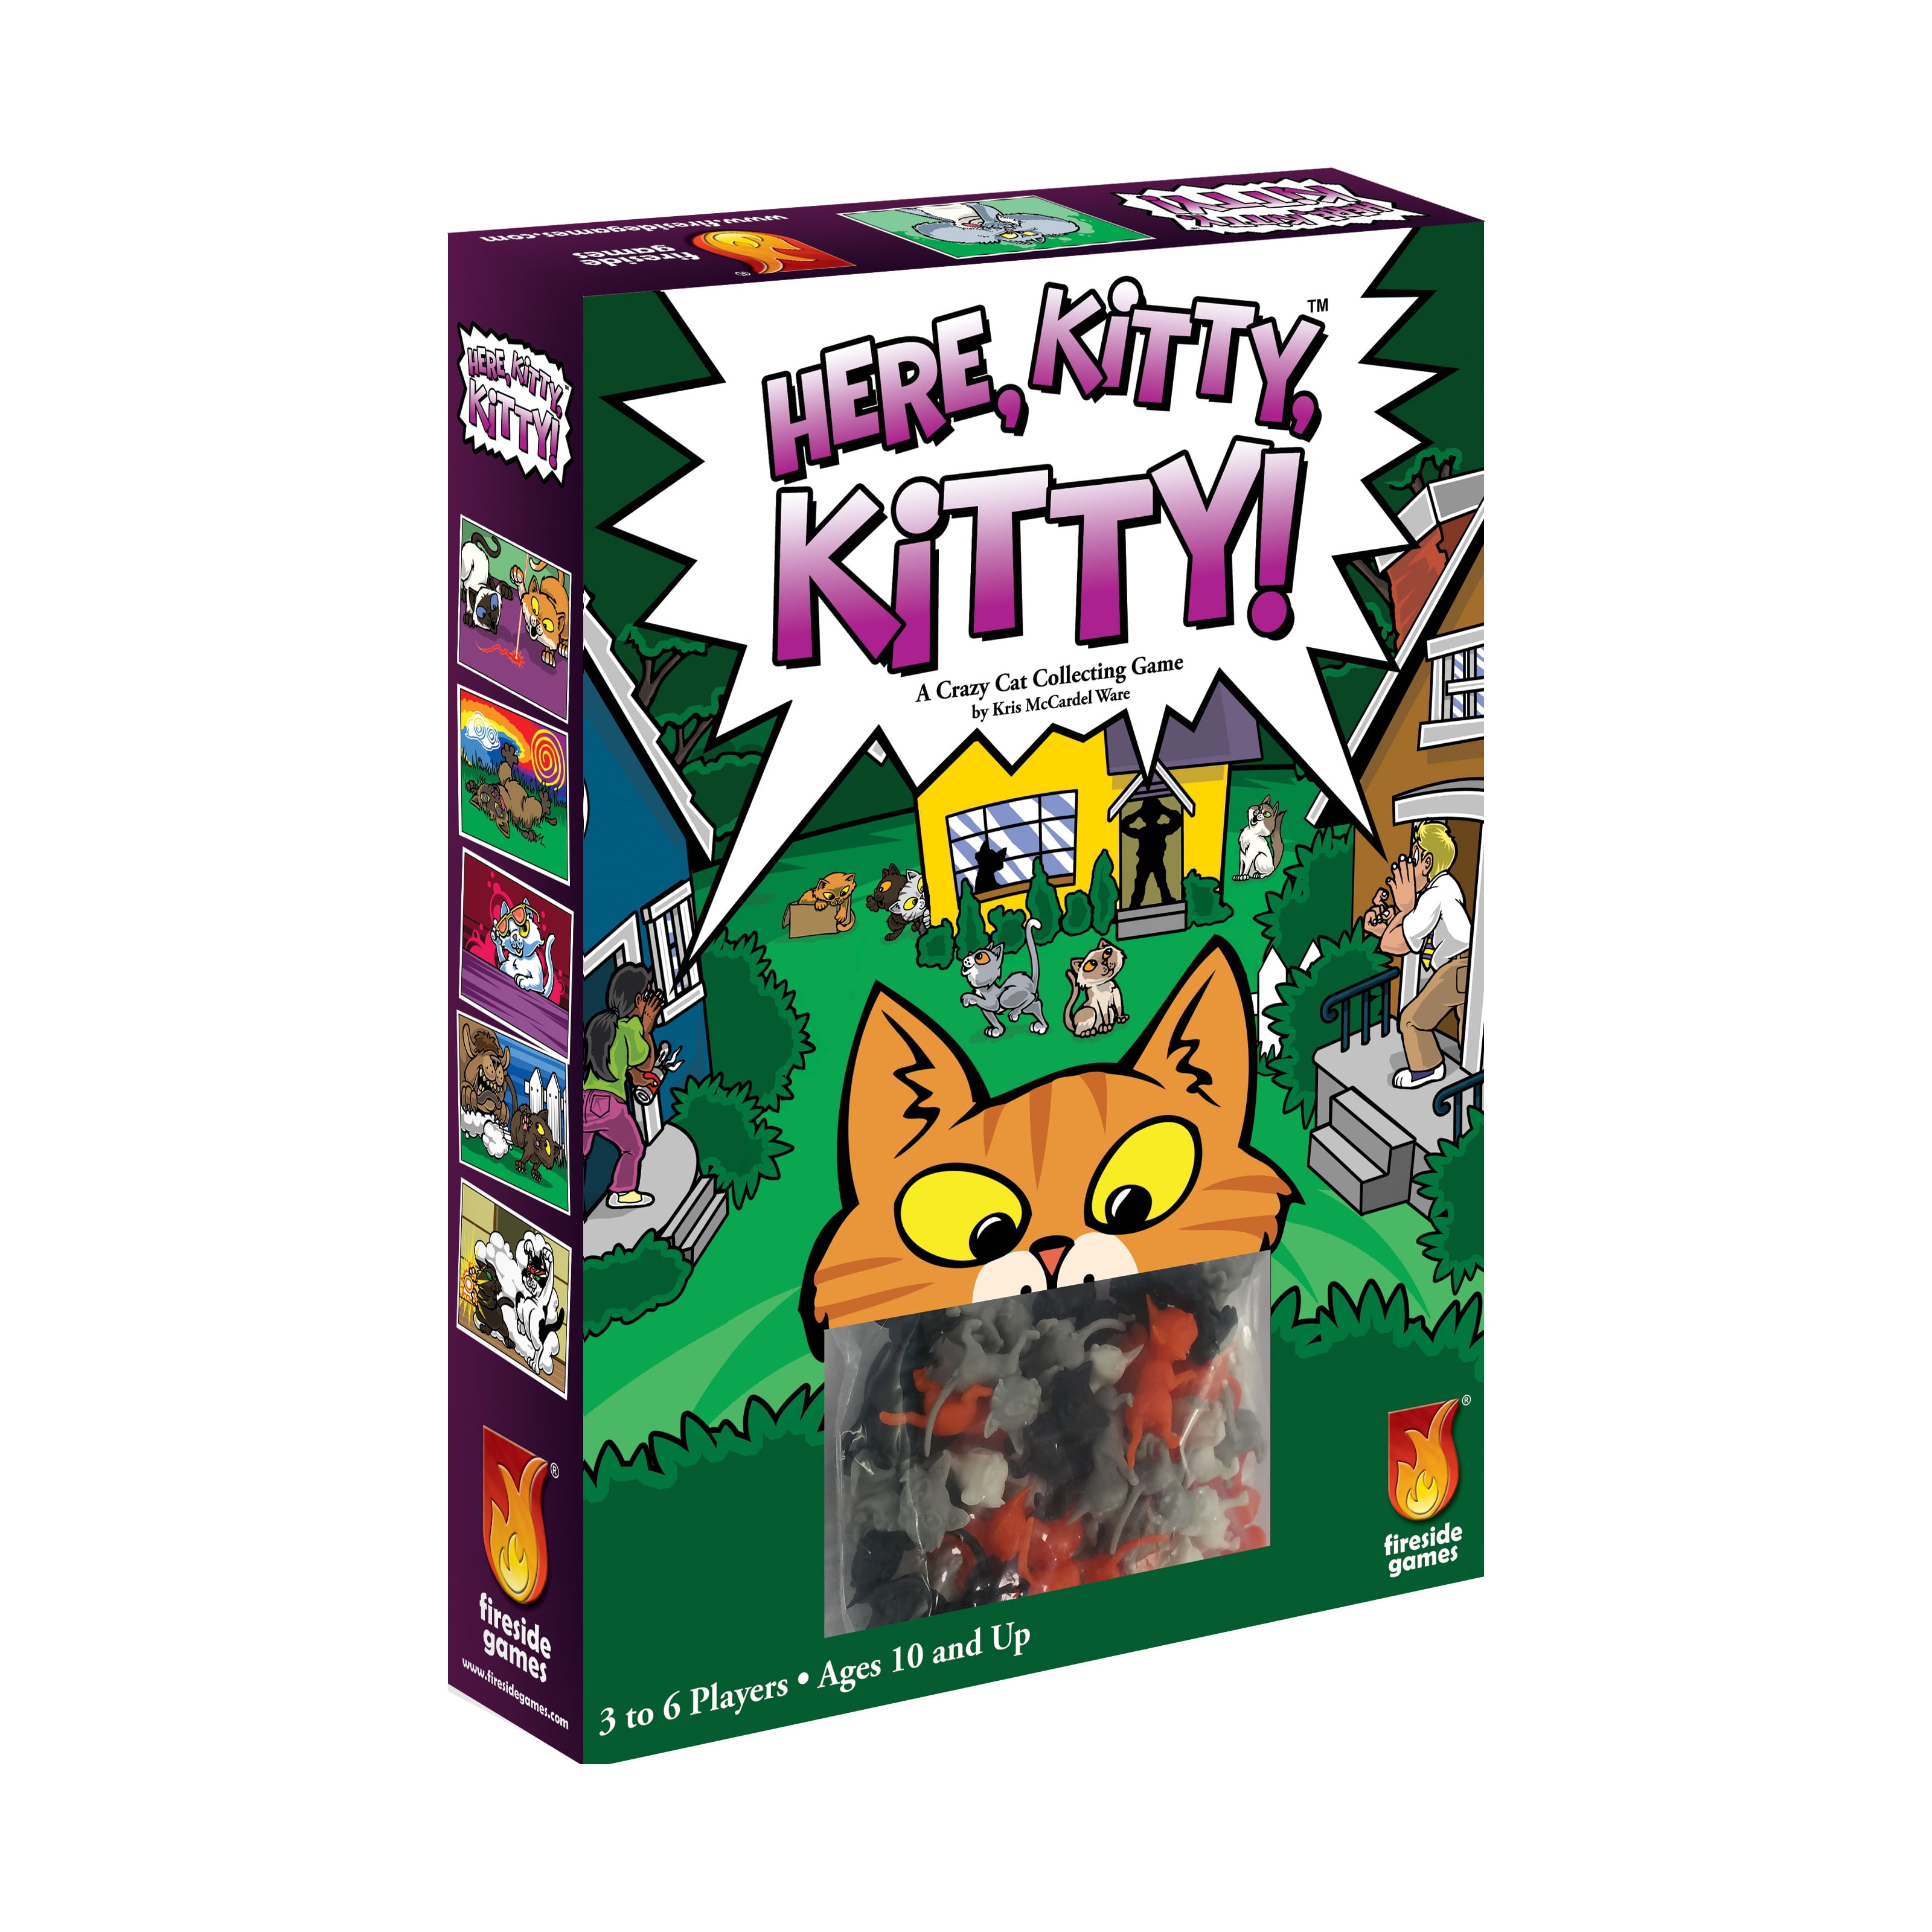 Kitties Board Game Fun Family Kids Children Game Catastrophe Cat Stacking Game 